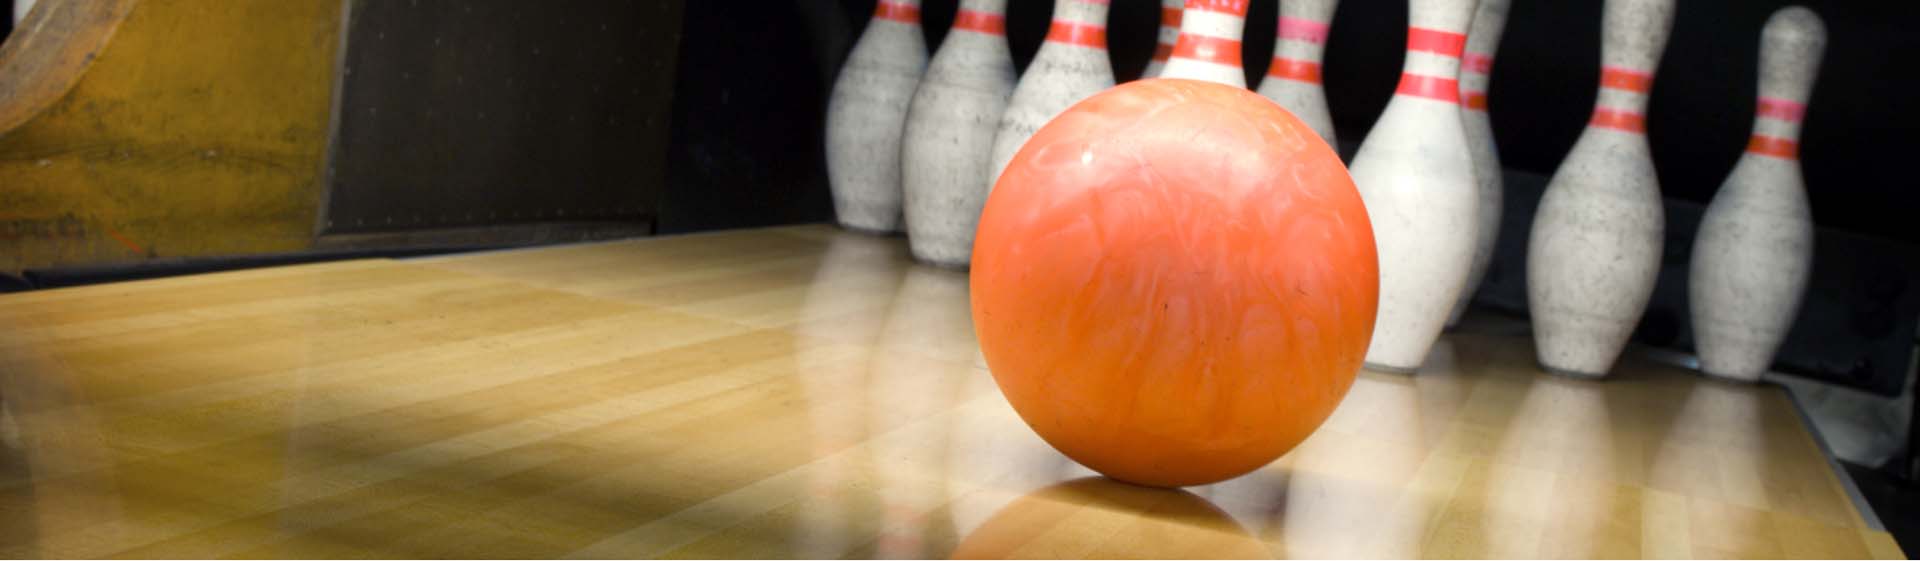 bowlingkugel-orange-cta.jpg